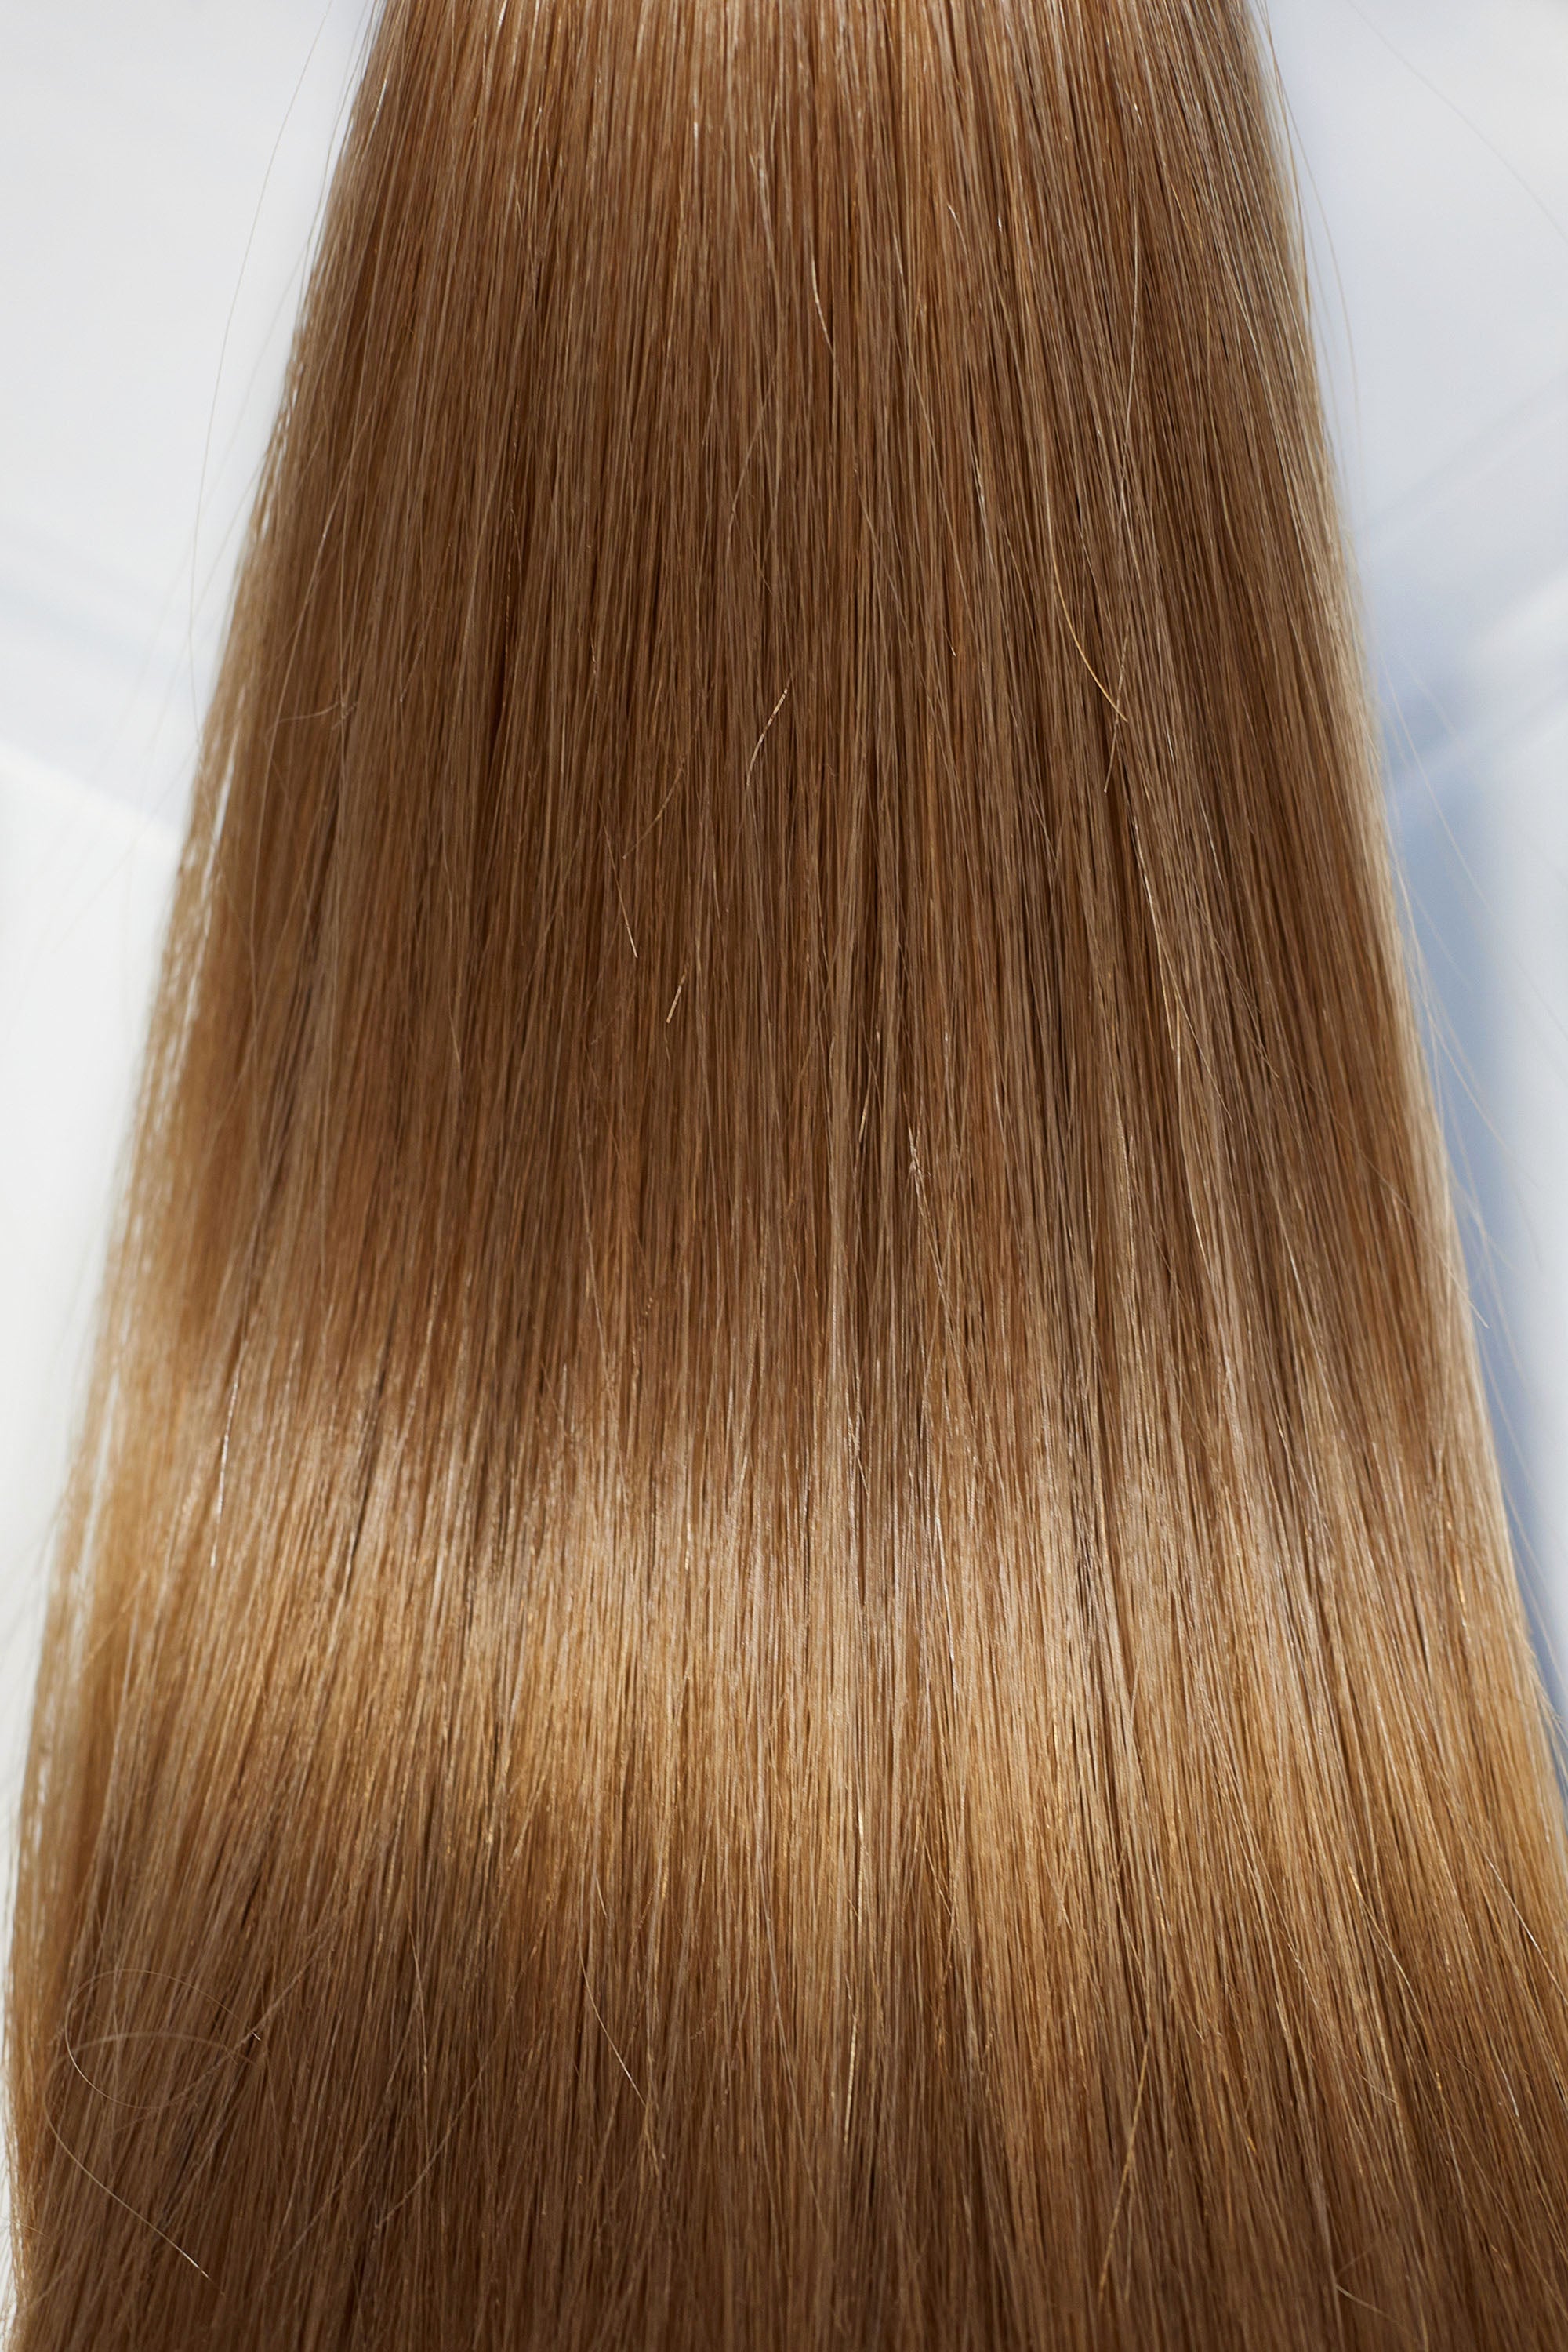 Behair professional Keratin Tip "Premium" 24" (60cm) Natural Straight Caramel Brown #8 - 25g (1g each pcs) hair extensions